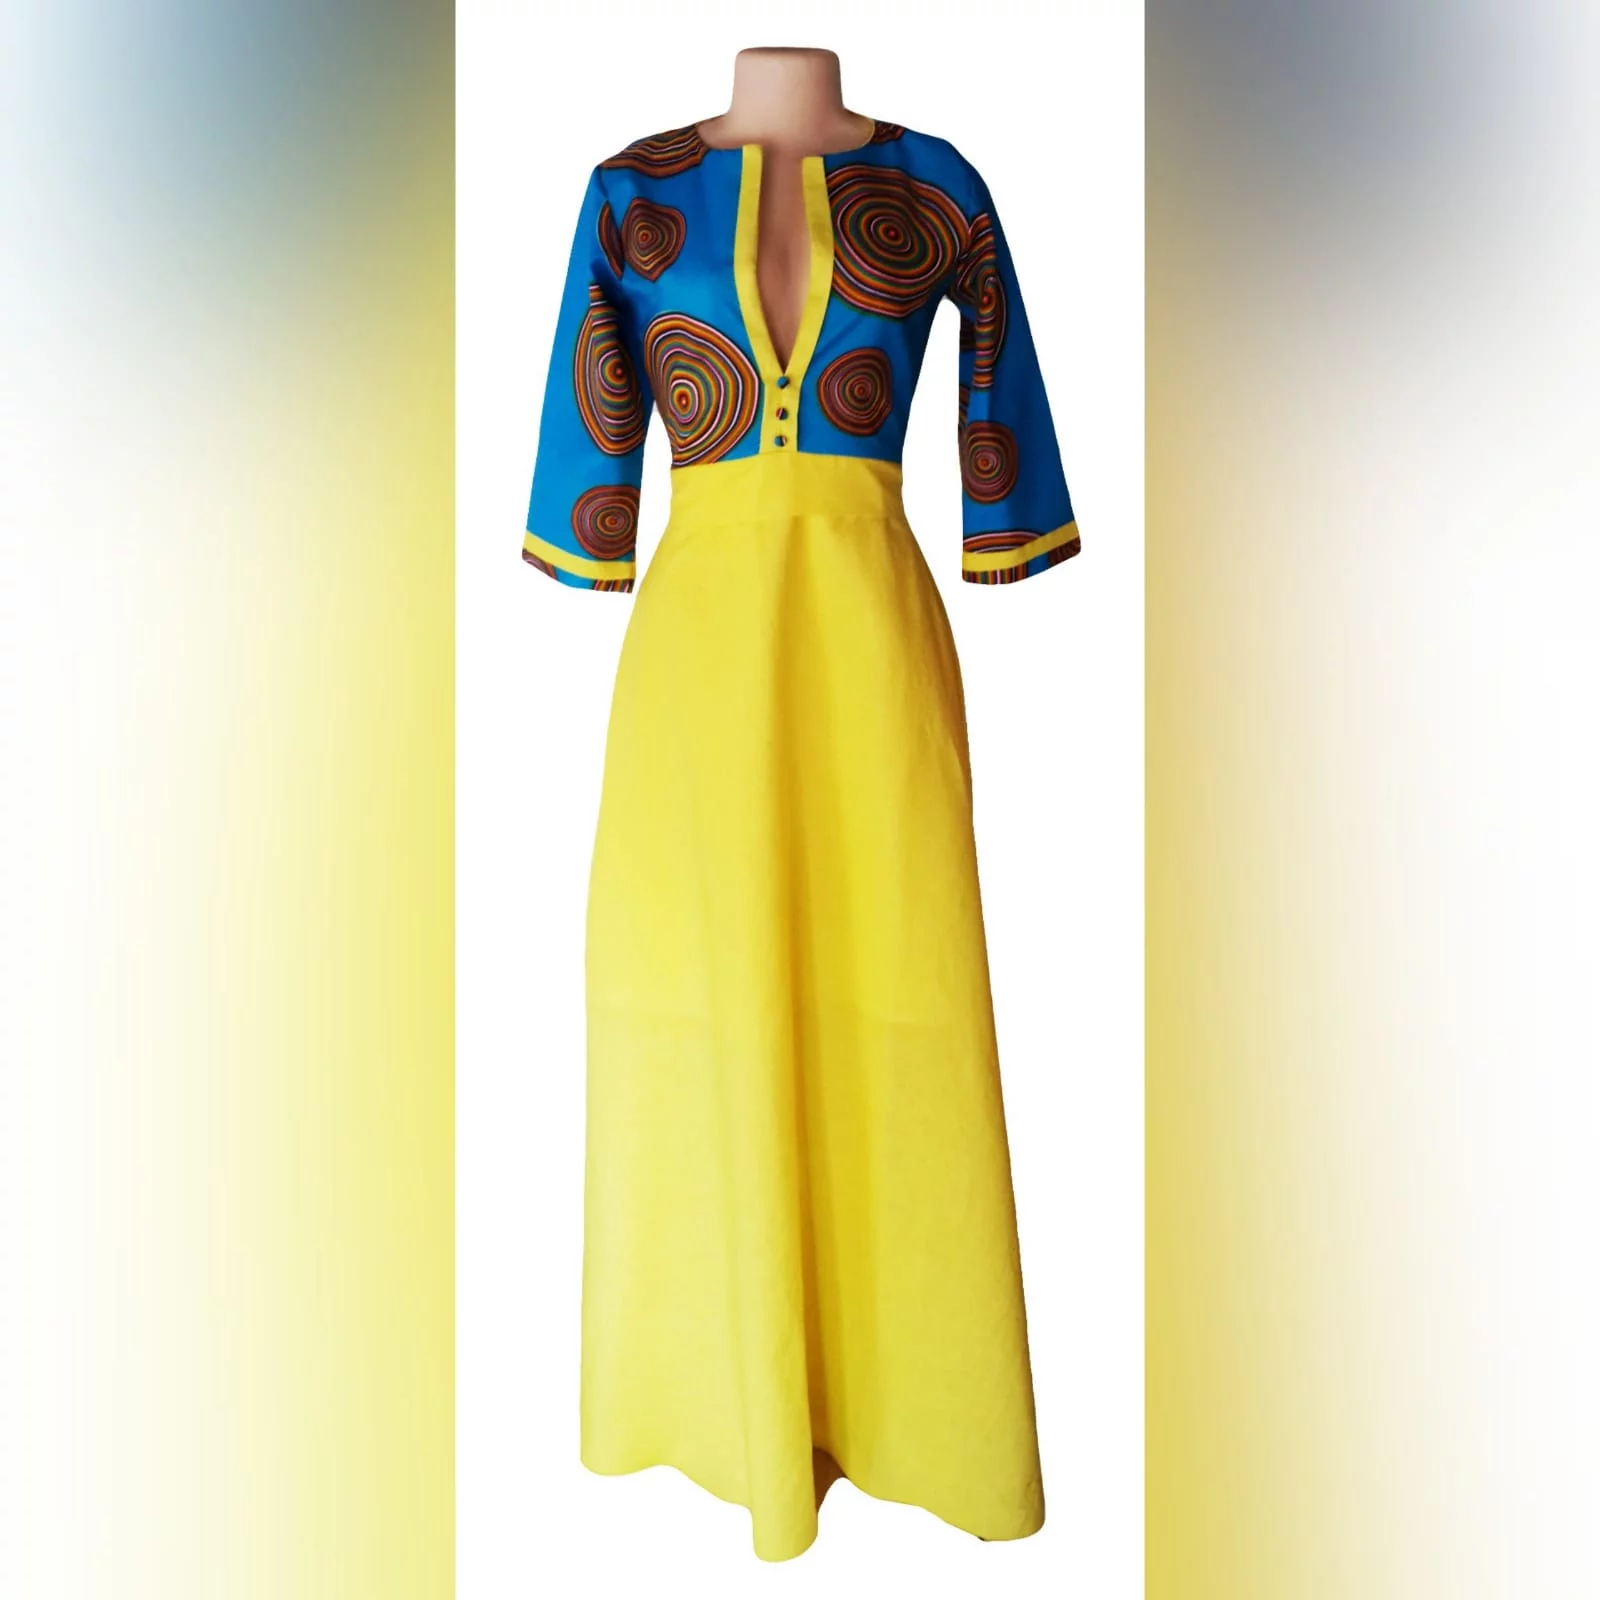 Blue & yellow modern traditional dress 8 modern traditional blue and yellow empire fit dress. Flowy bottom, neckline with a slit.